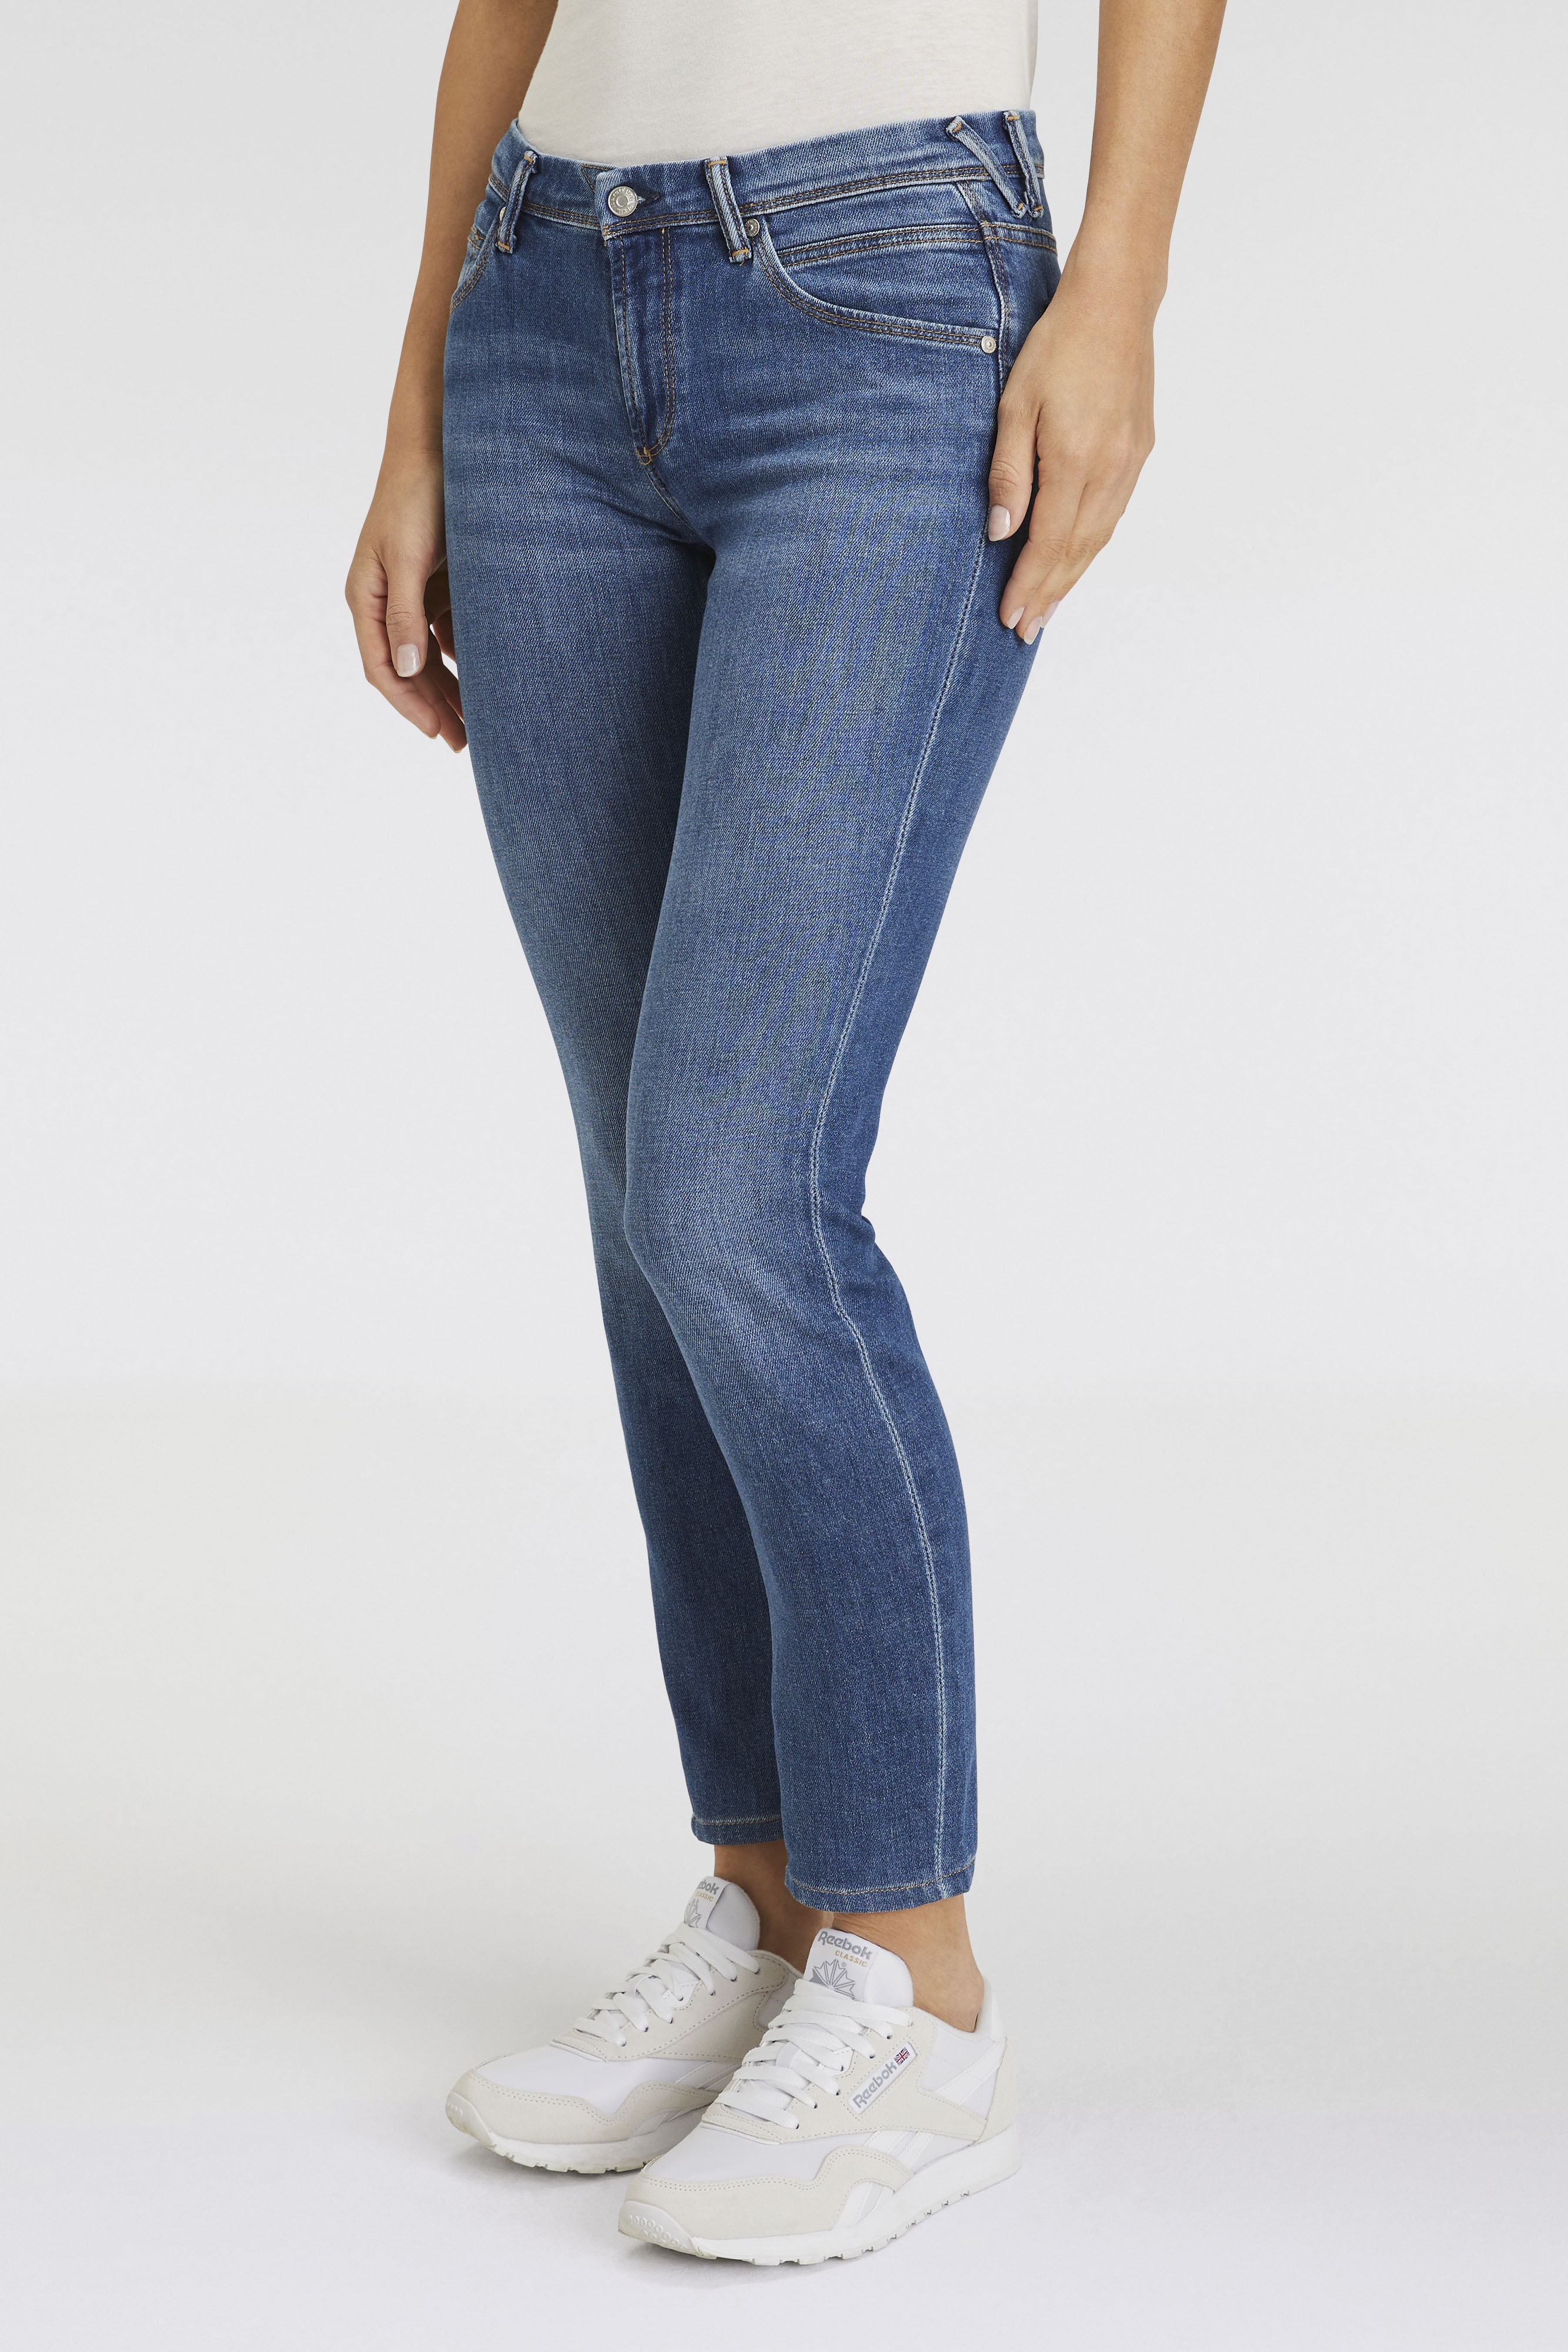 Skinny-fit-Jeans MARC O'POLO DENIM "Alva" Gr. 28, Länge 32, blau (denim blue) Damen Jeans Röhrenjeans